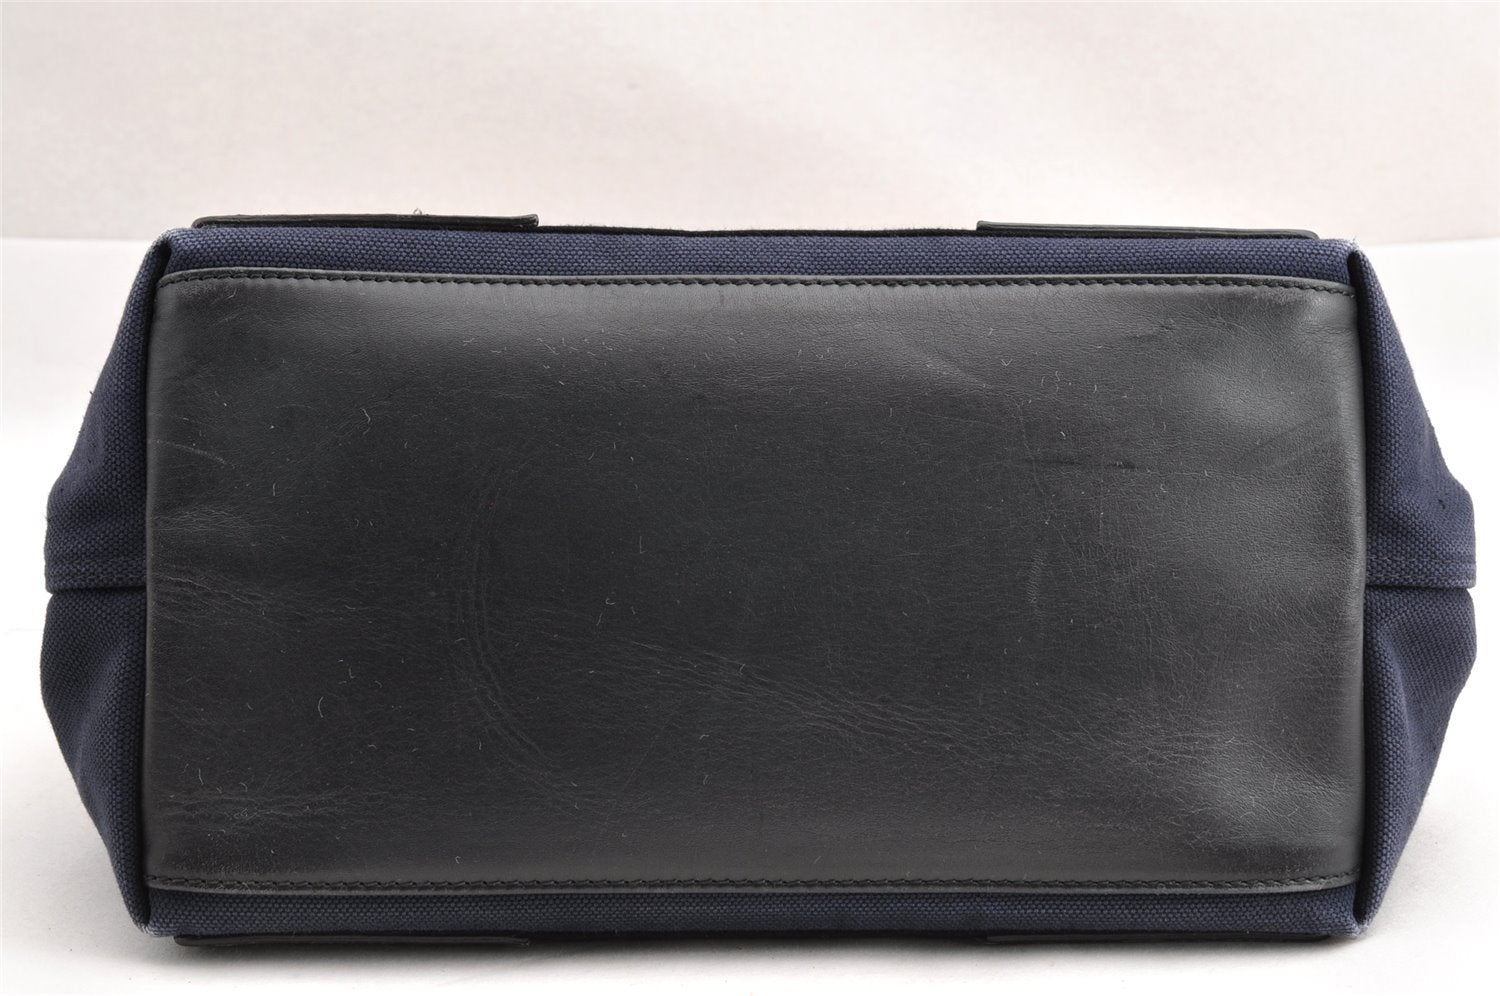 Authentic BALENCIAGA Navy Caba S Hand Bag Canvas Leather 339933 Navy Blue 3224I